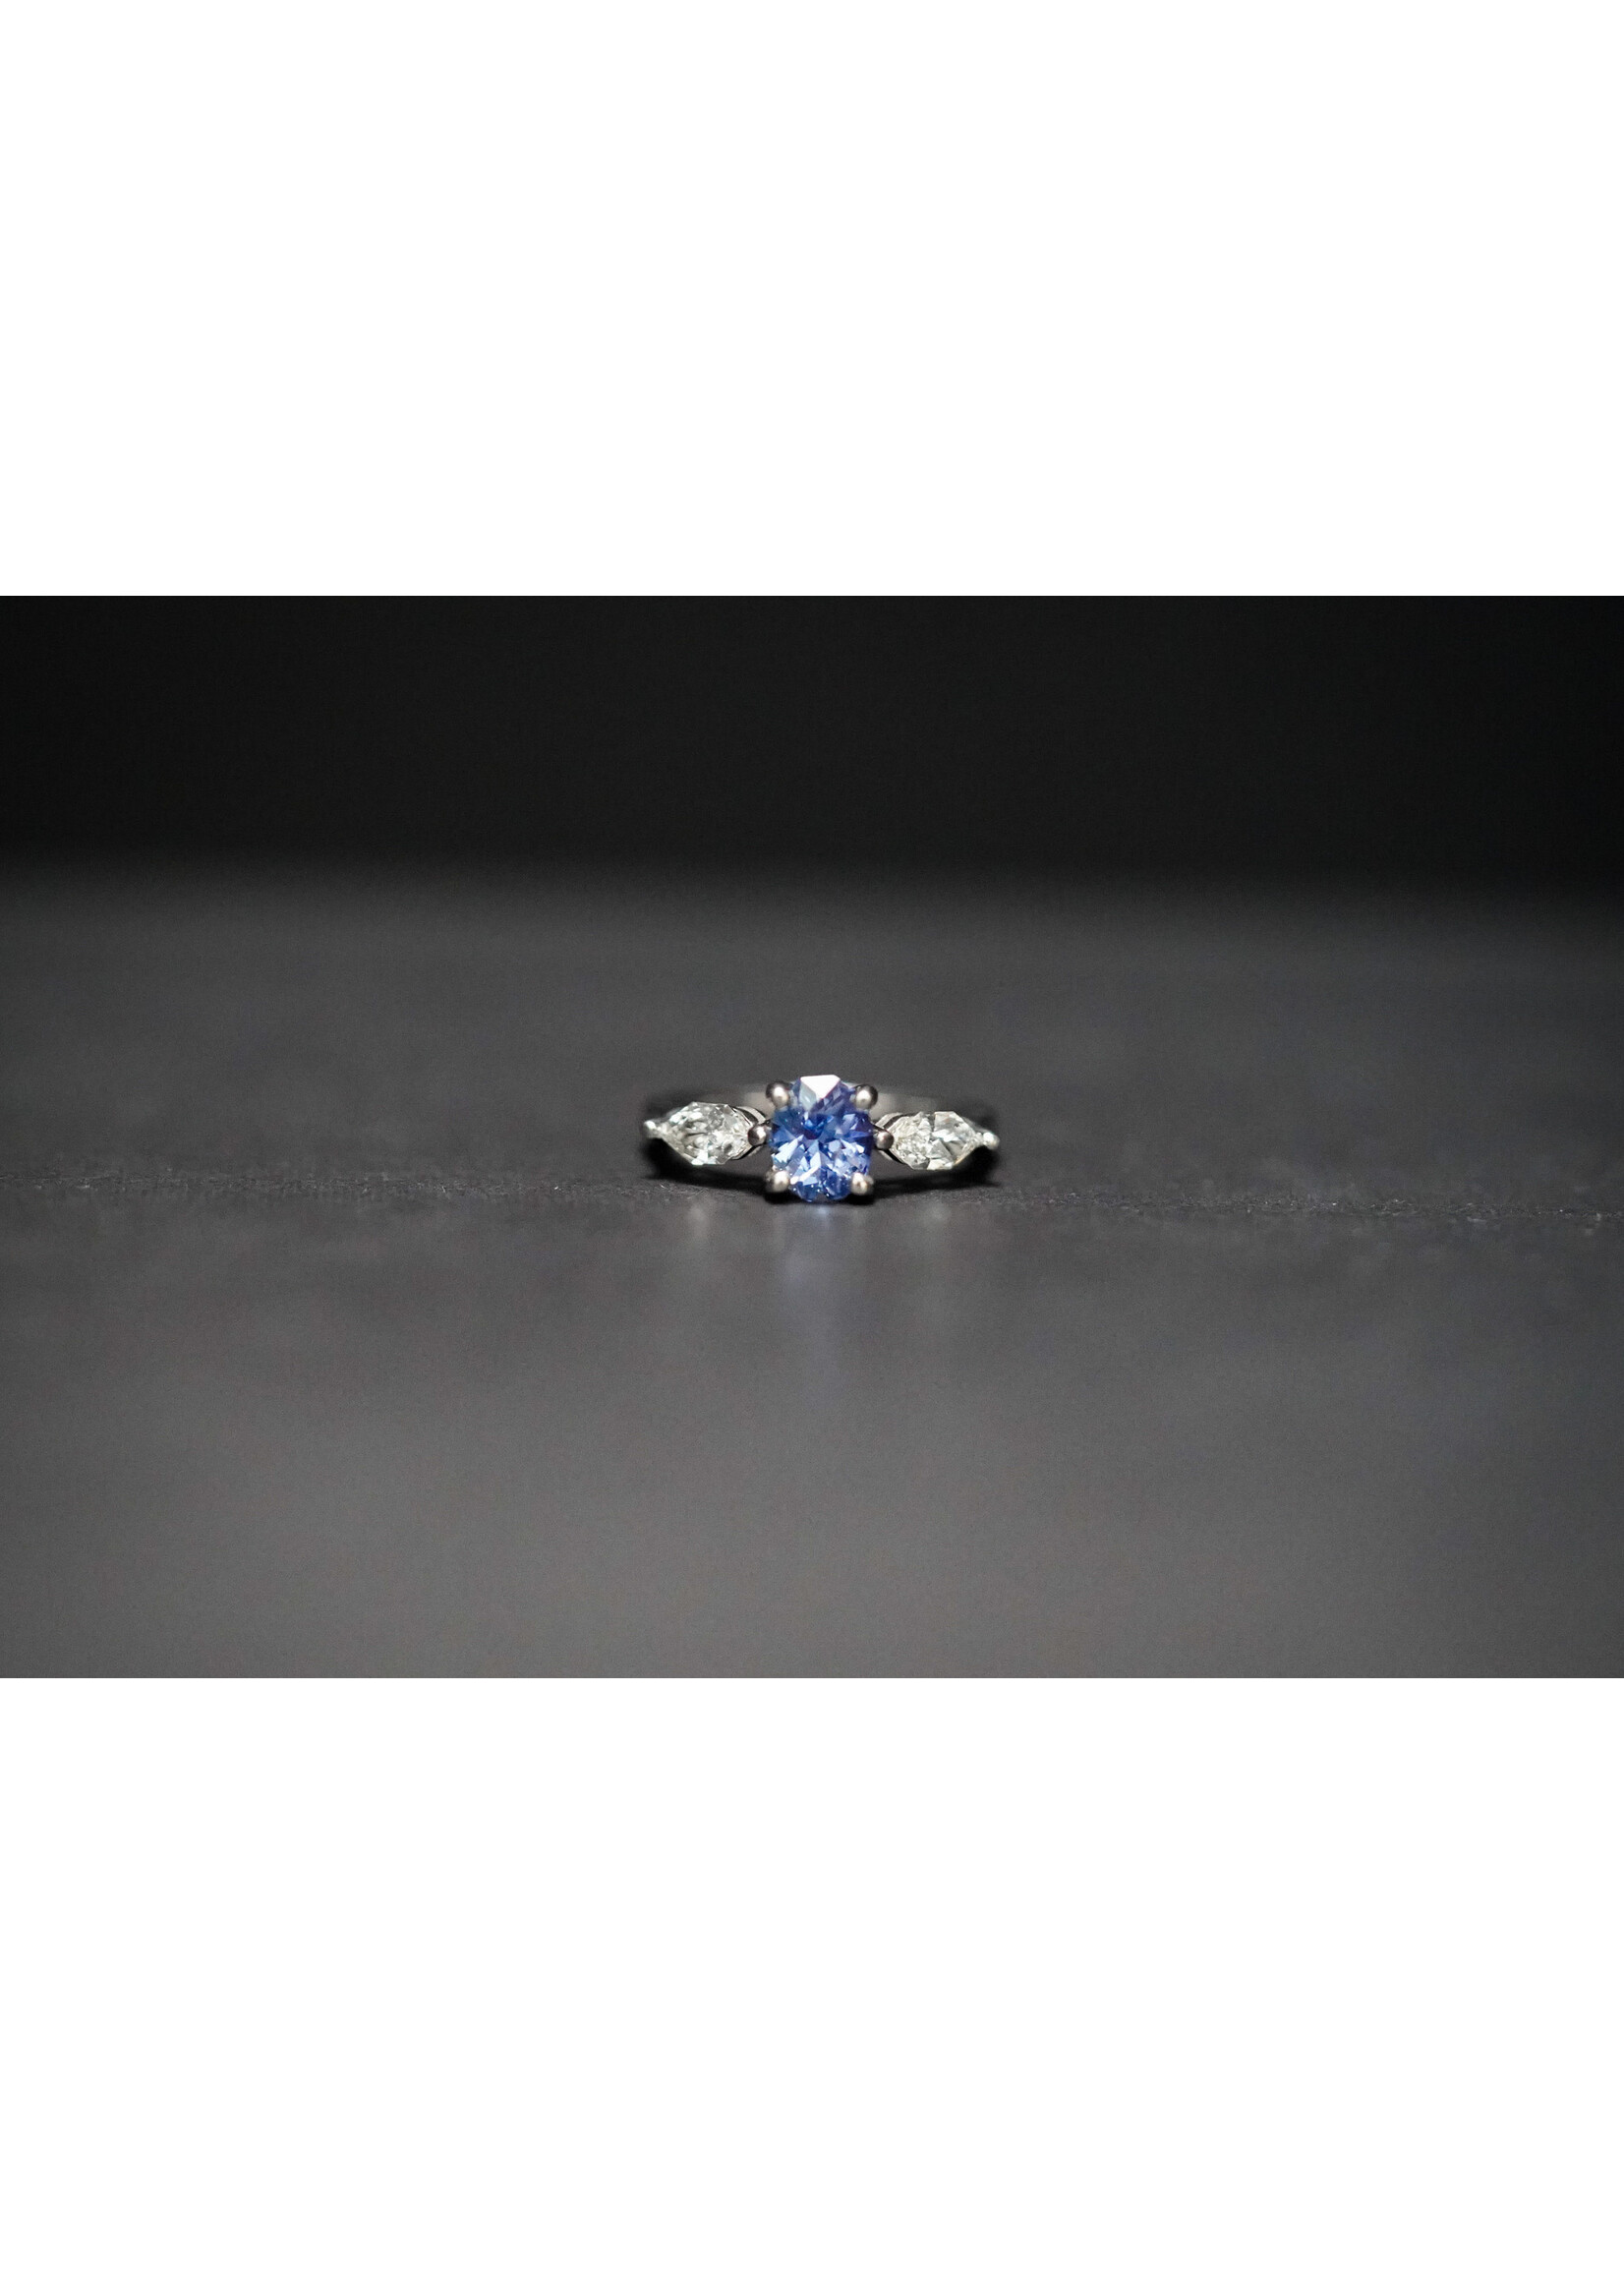 14KW 3.2g 1.98ctw (1.34ctr) Oval Blue Thai Sapphire & Diamond Fashion Ring (size 6)